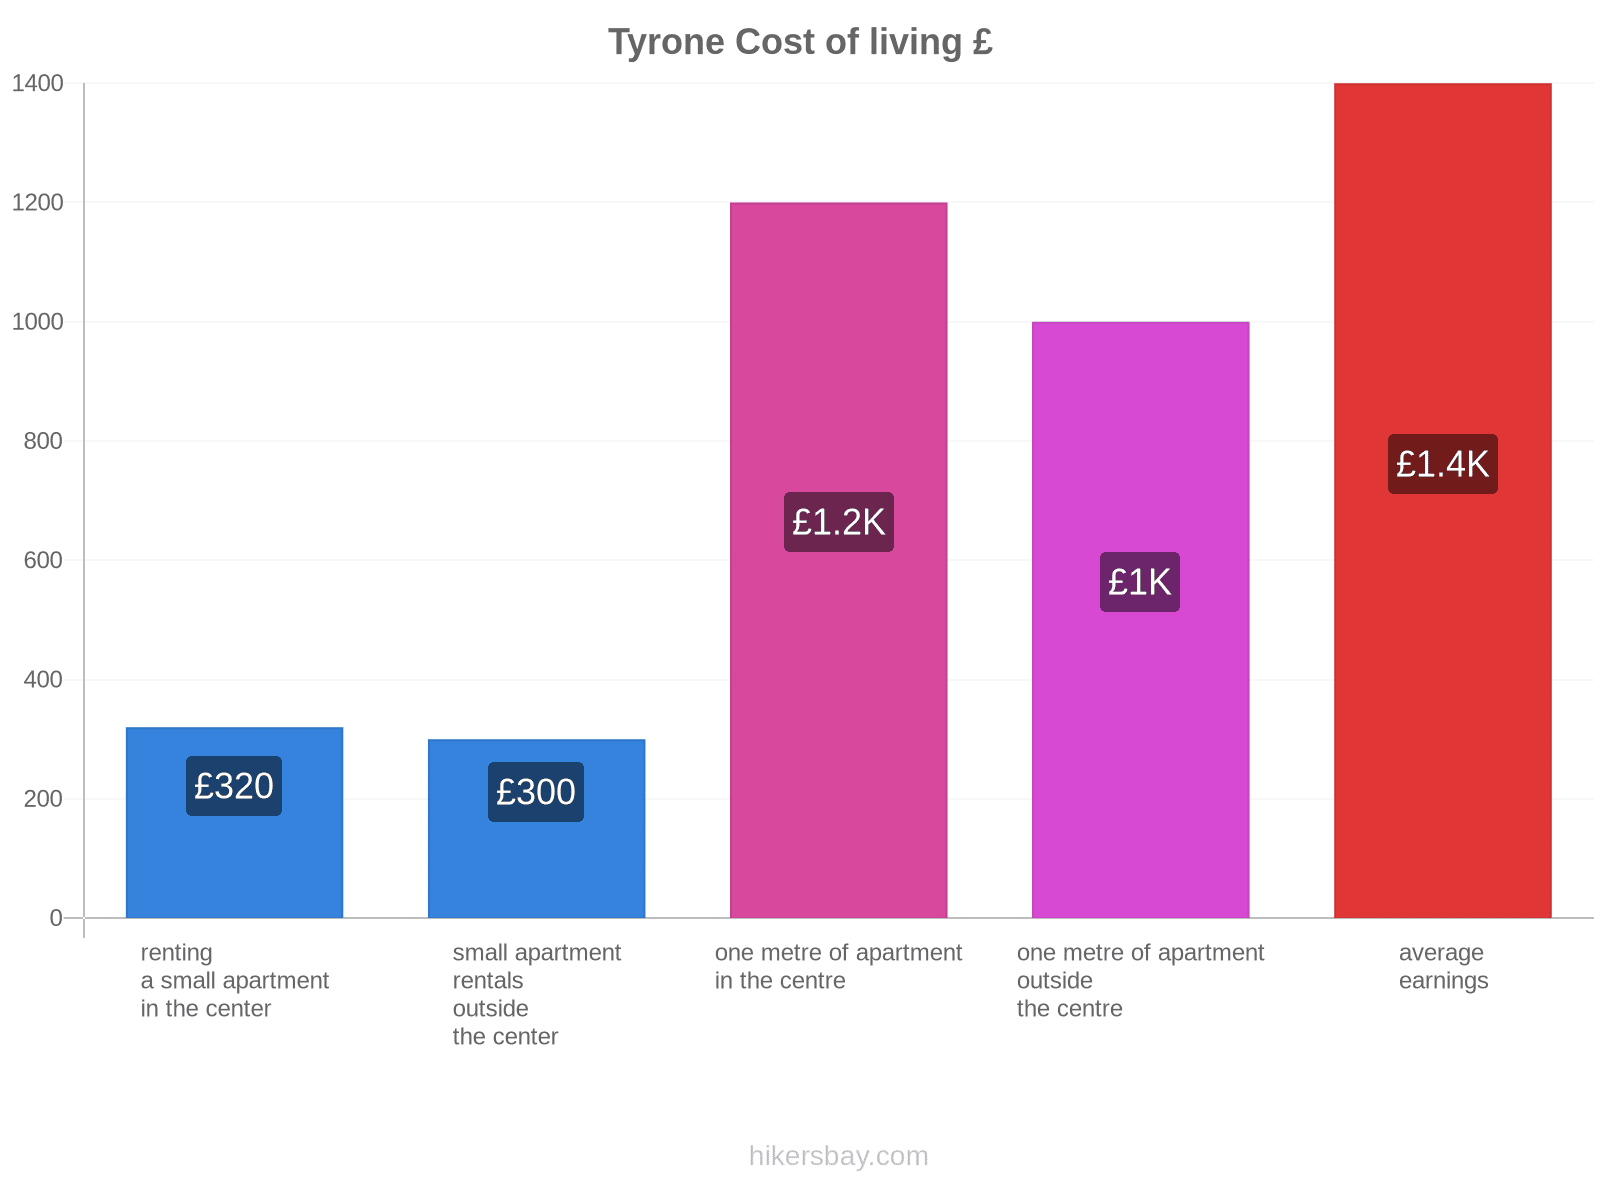 Tyrone cost of living hikersbay.com